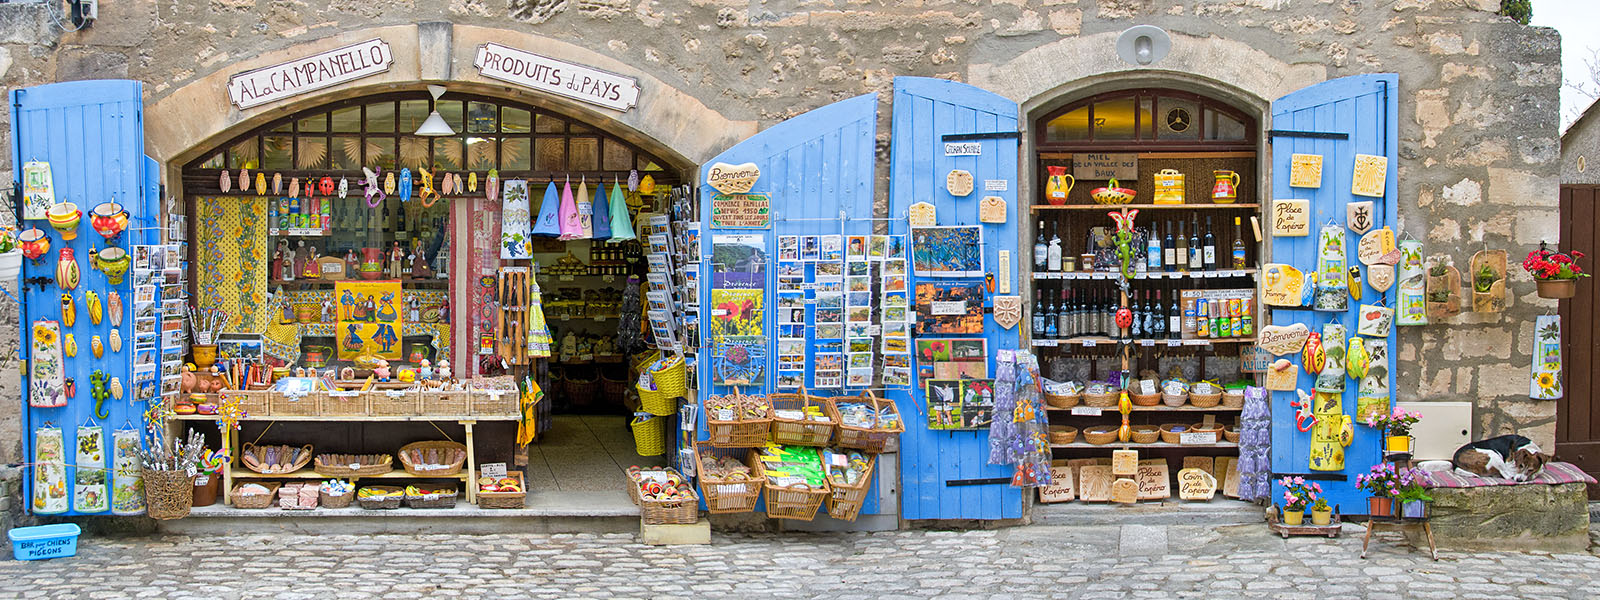 Provençal store (2-image panorama)